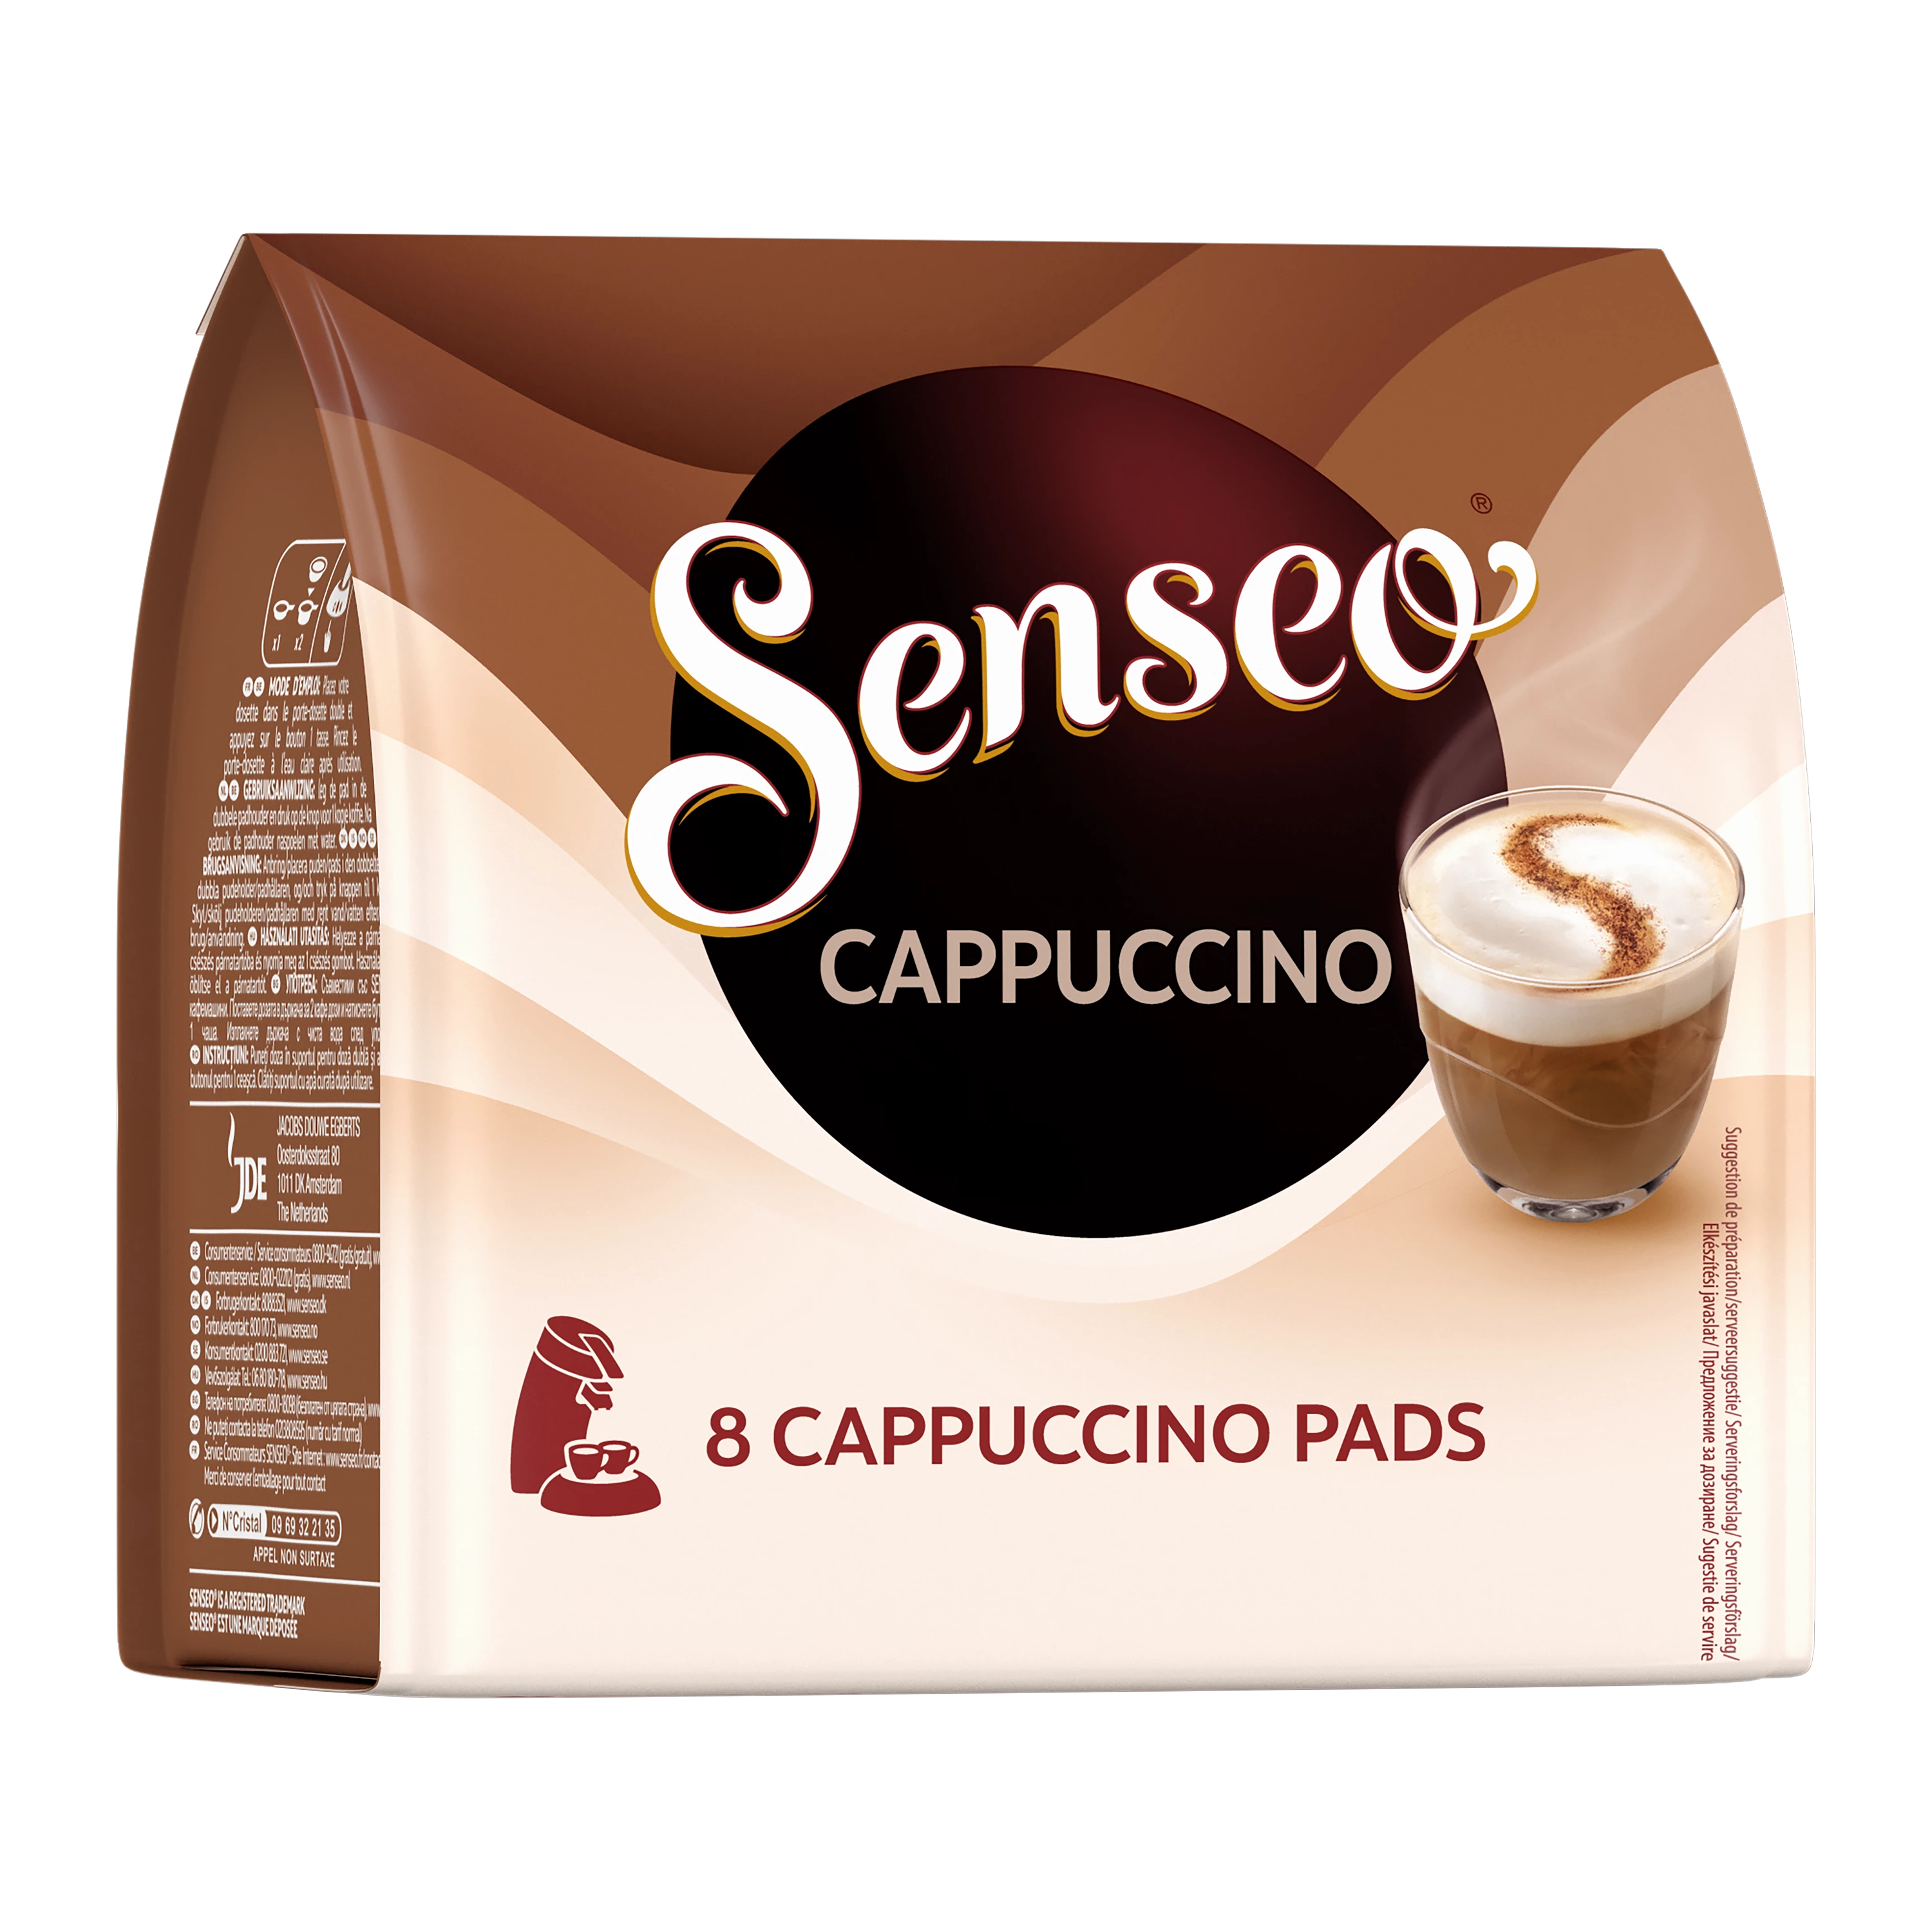 Dosettes Senseo® compatibles Domino Café Caramel - 12 paquets - 216 dosettes